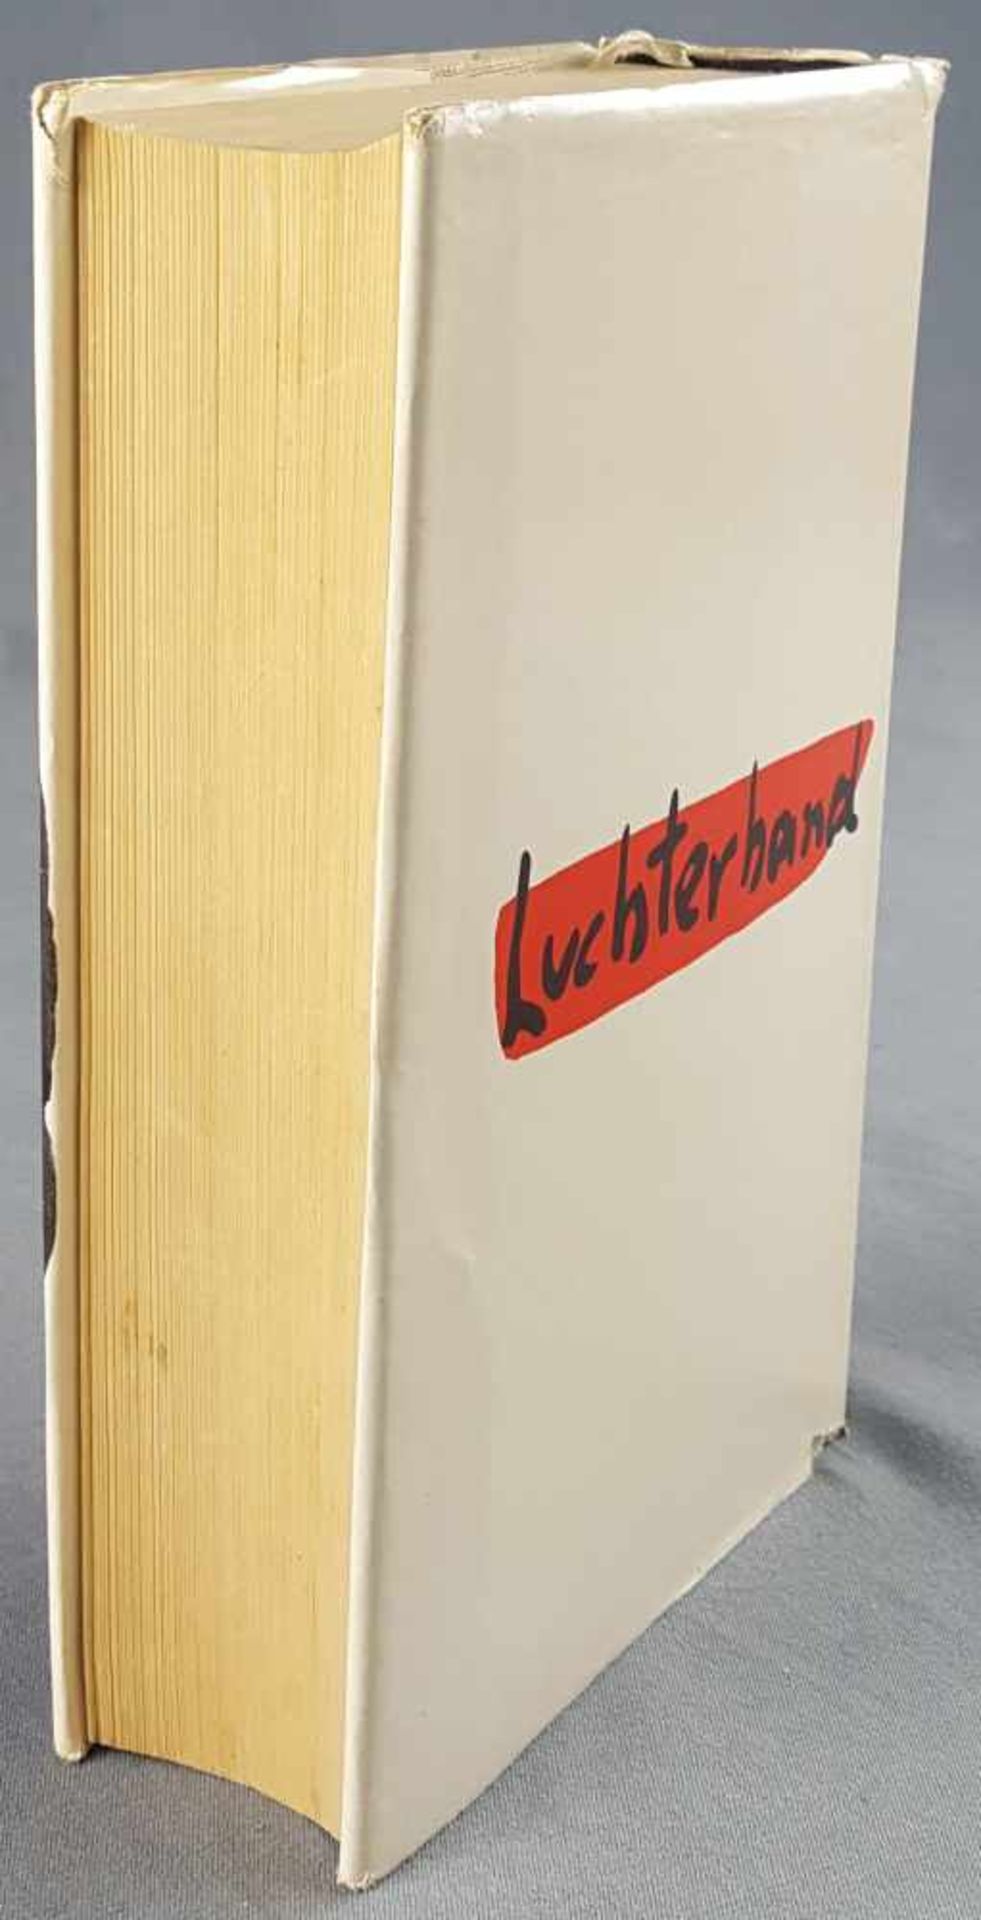 Günter GRASS (1927 - 2015). ''Die Blechtrommel'', Luchterhand, 1959, signed.< - Image 5 of 6